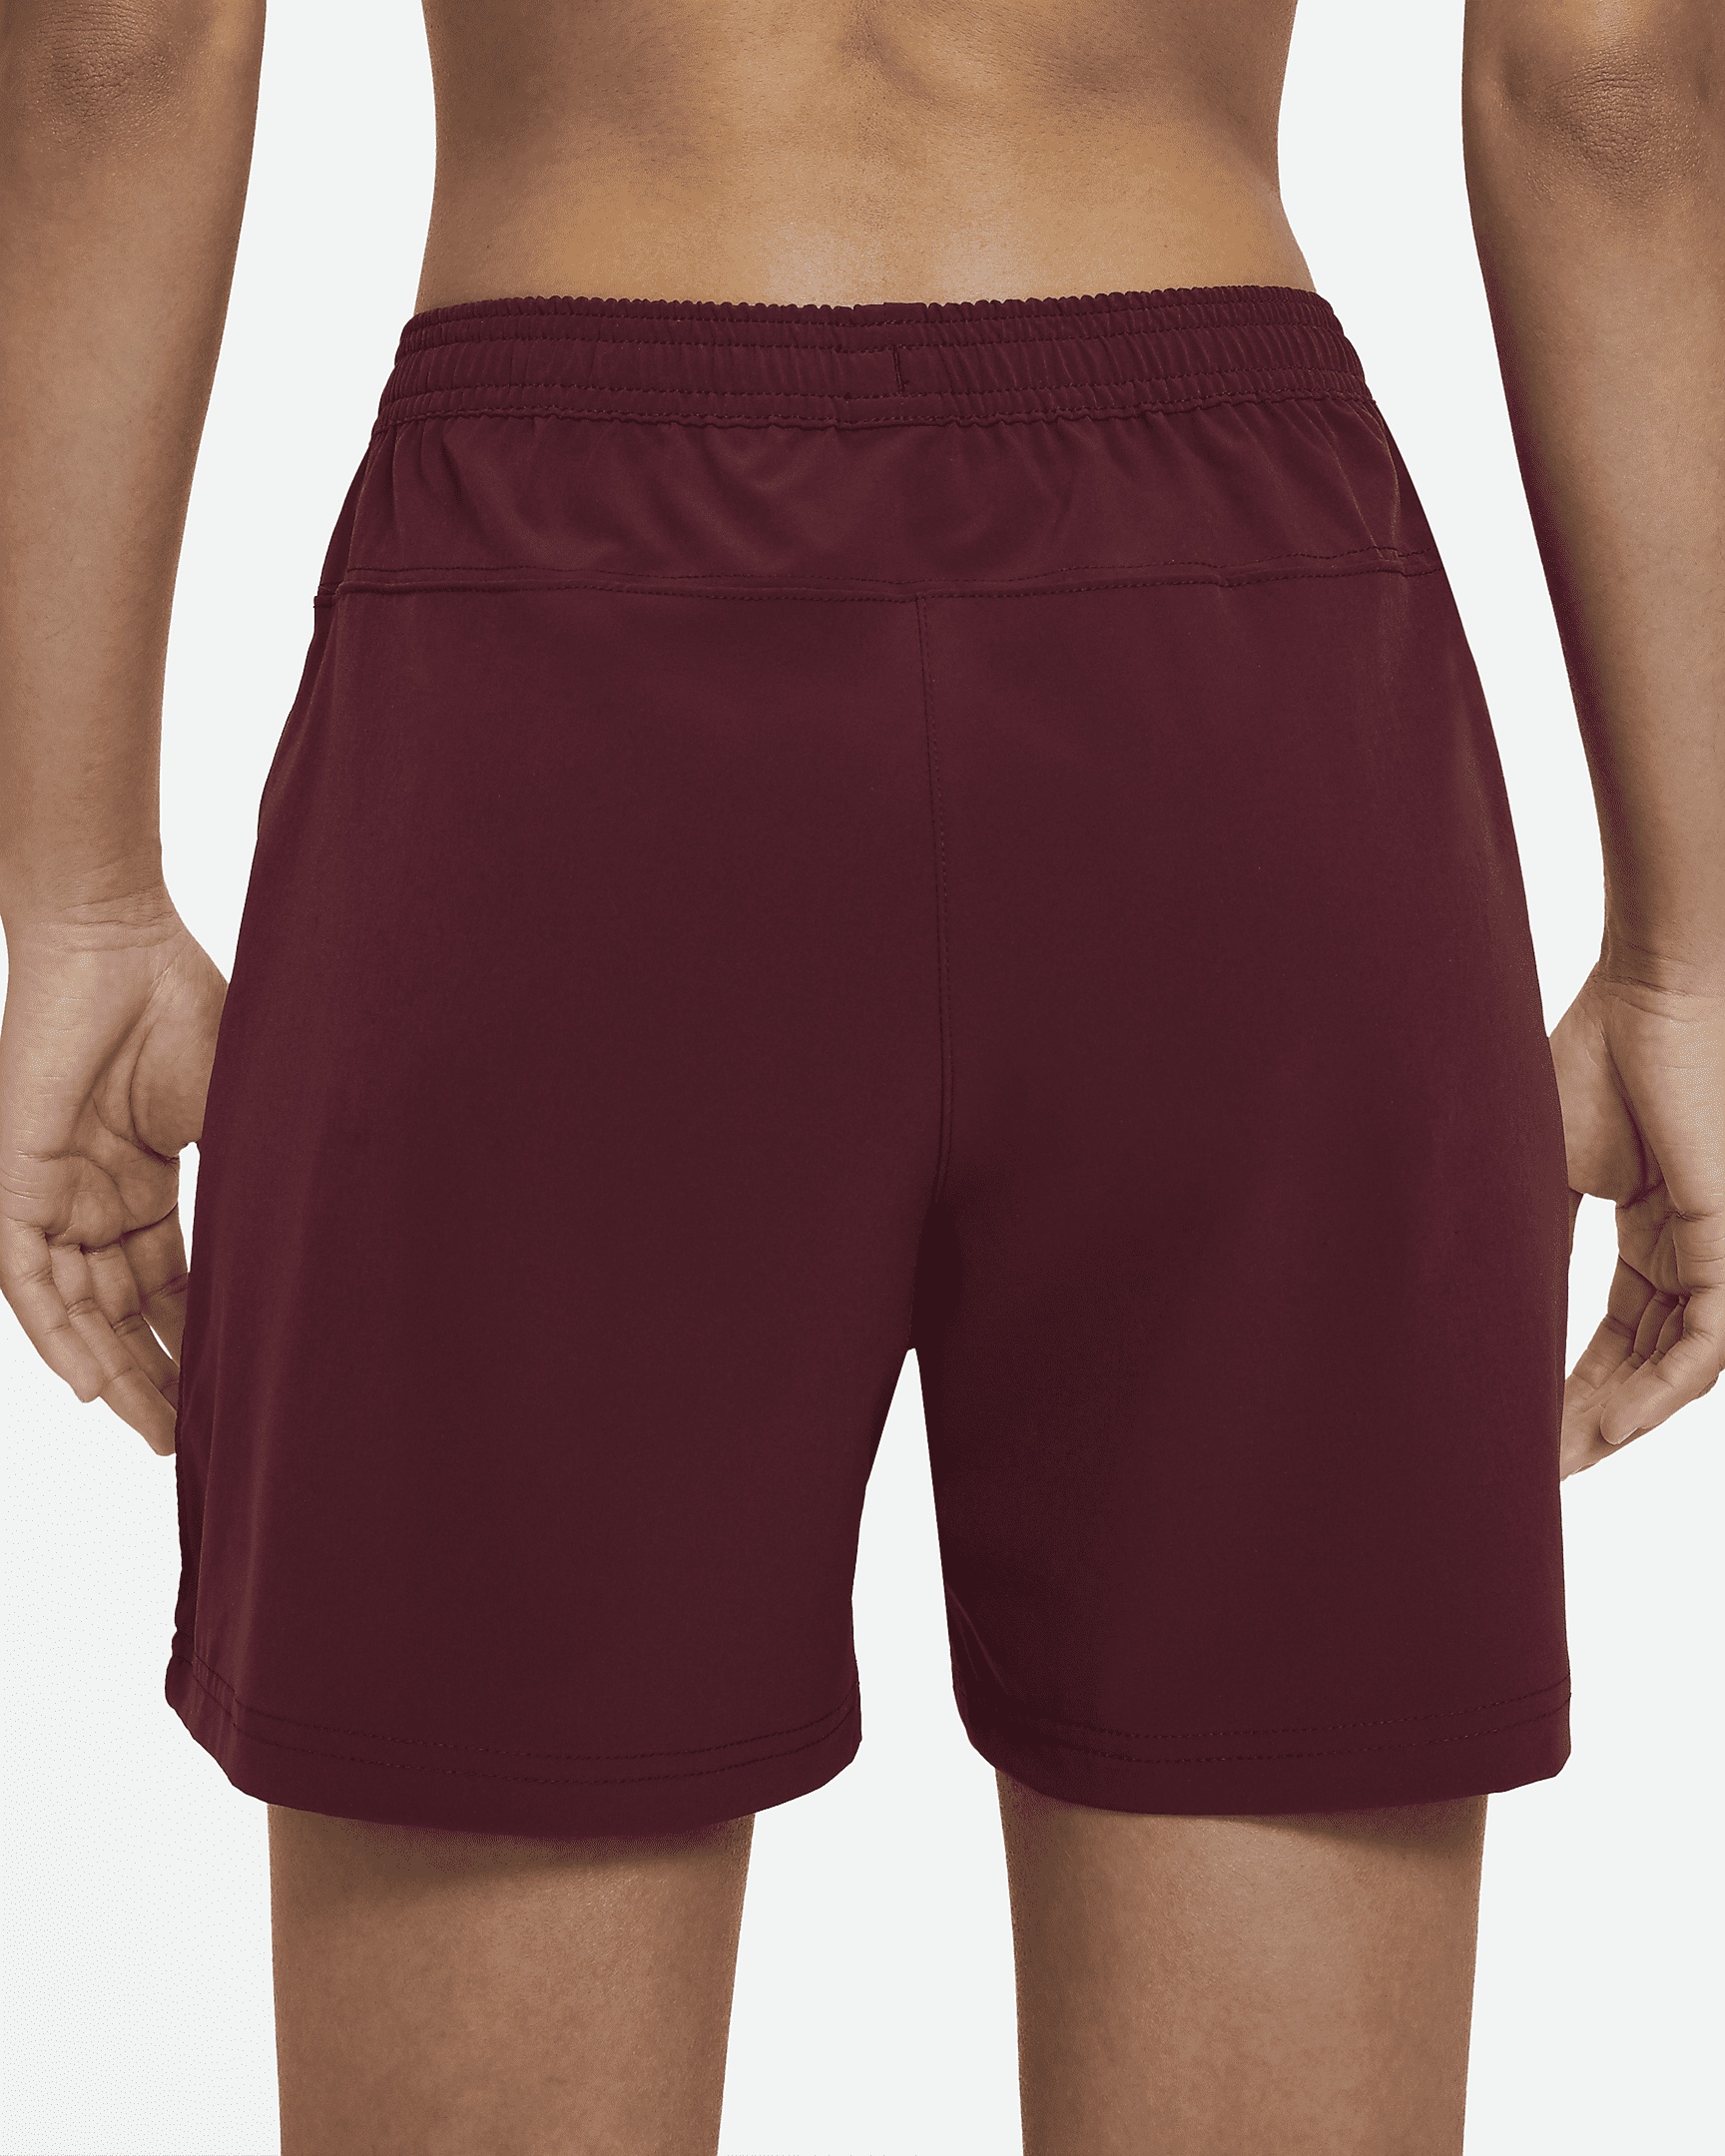 Nike Women's Vapor Flag Football Shorts - 3